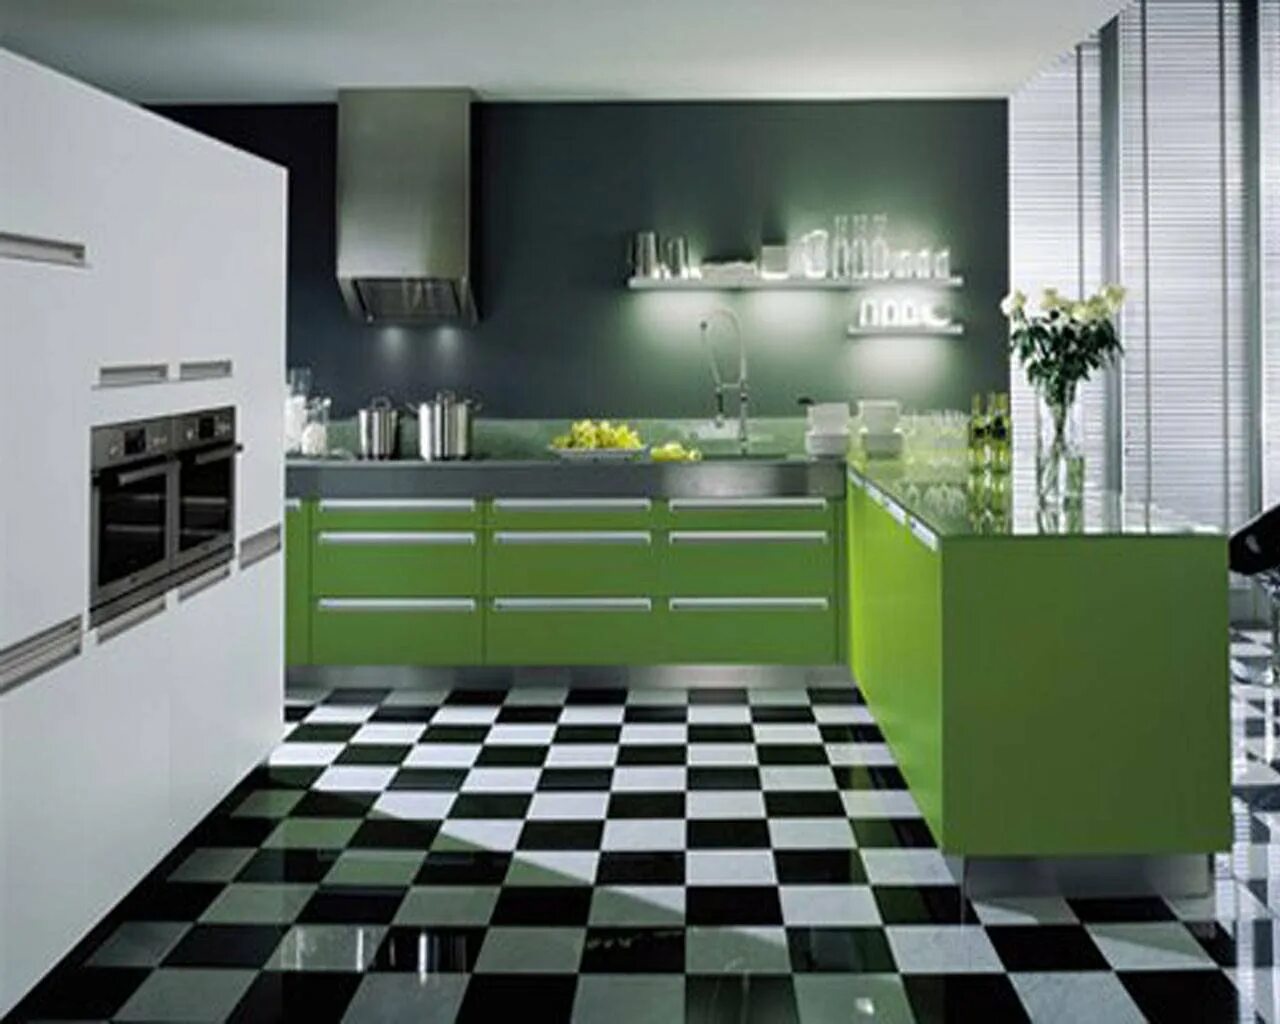 Черно зеленая кухня. Зеленая кухня. Кухня в зеленых тонах. Зеленая плитка на кухне. Кухня серо зеленого цвета.